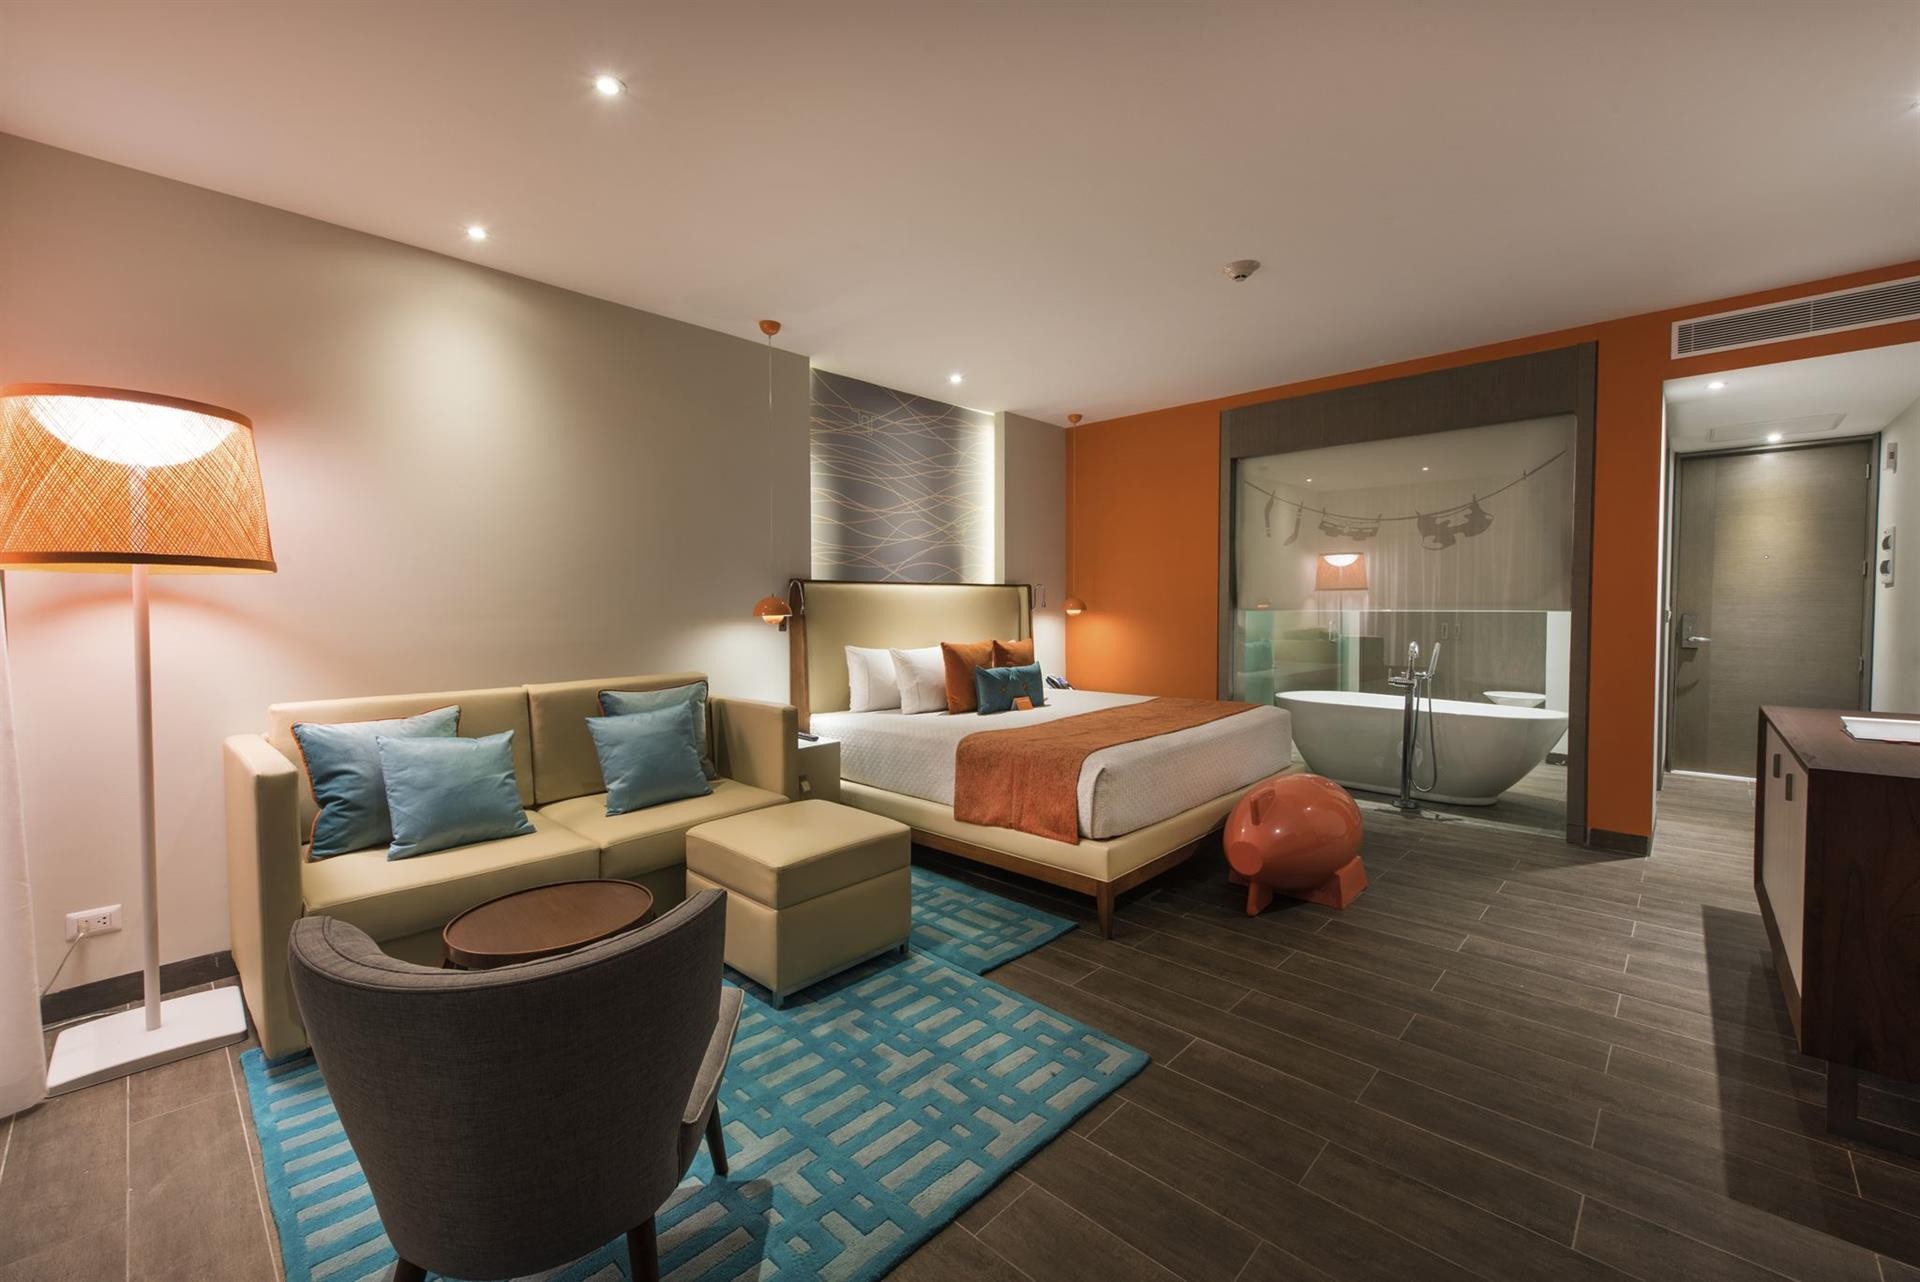 Pad Suite, Nickelodeon Hotel & Resort Punta Cana 5*